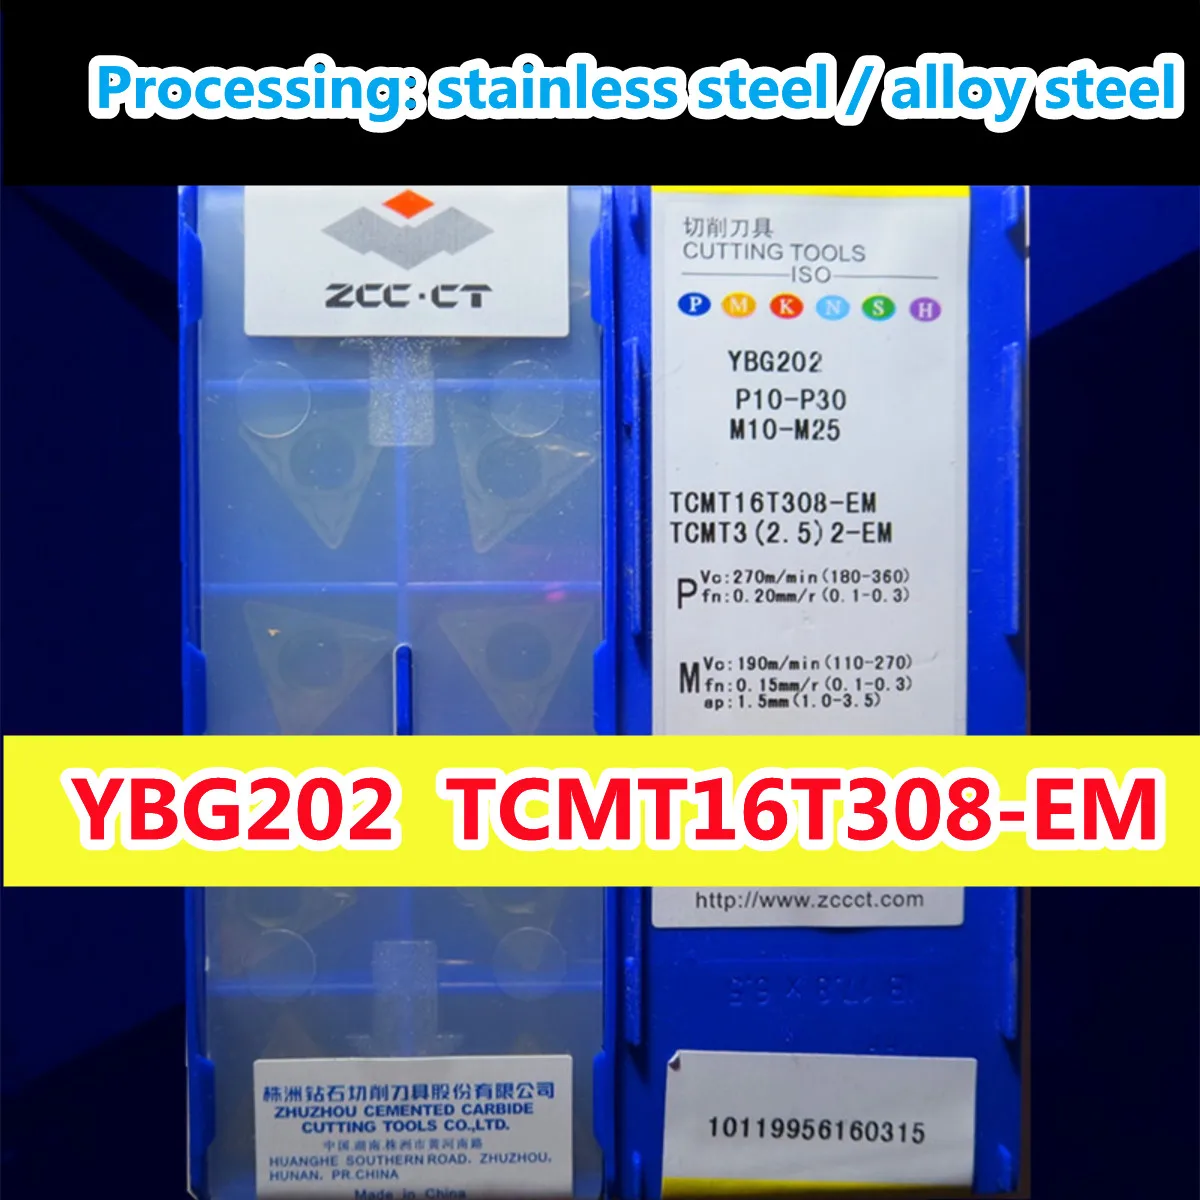 YBG202 TCMT16T308-EM  10pcs/set 100%original ZCC.CT insert YBG202=M10-M30 Processing: stainless steel / alloy steel 15mm pipe bender